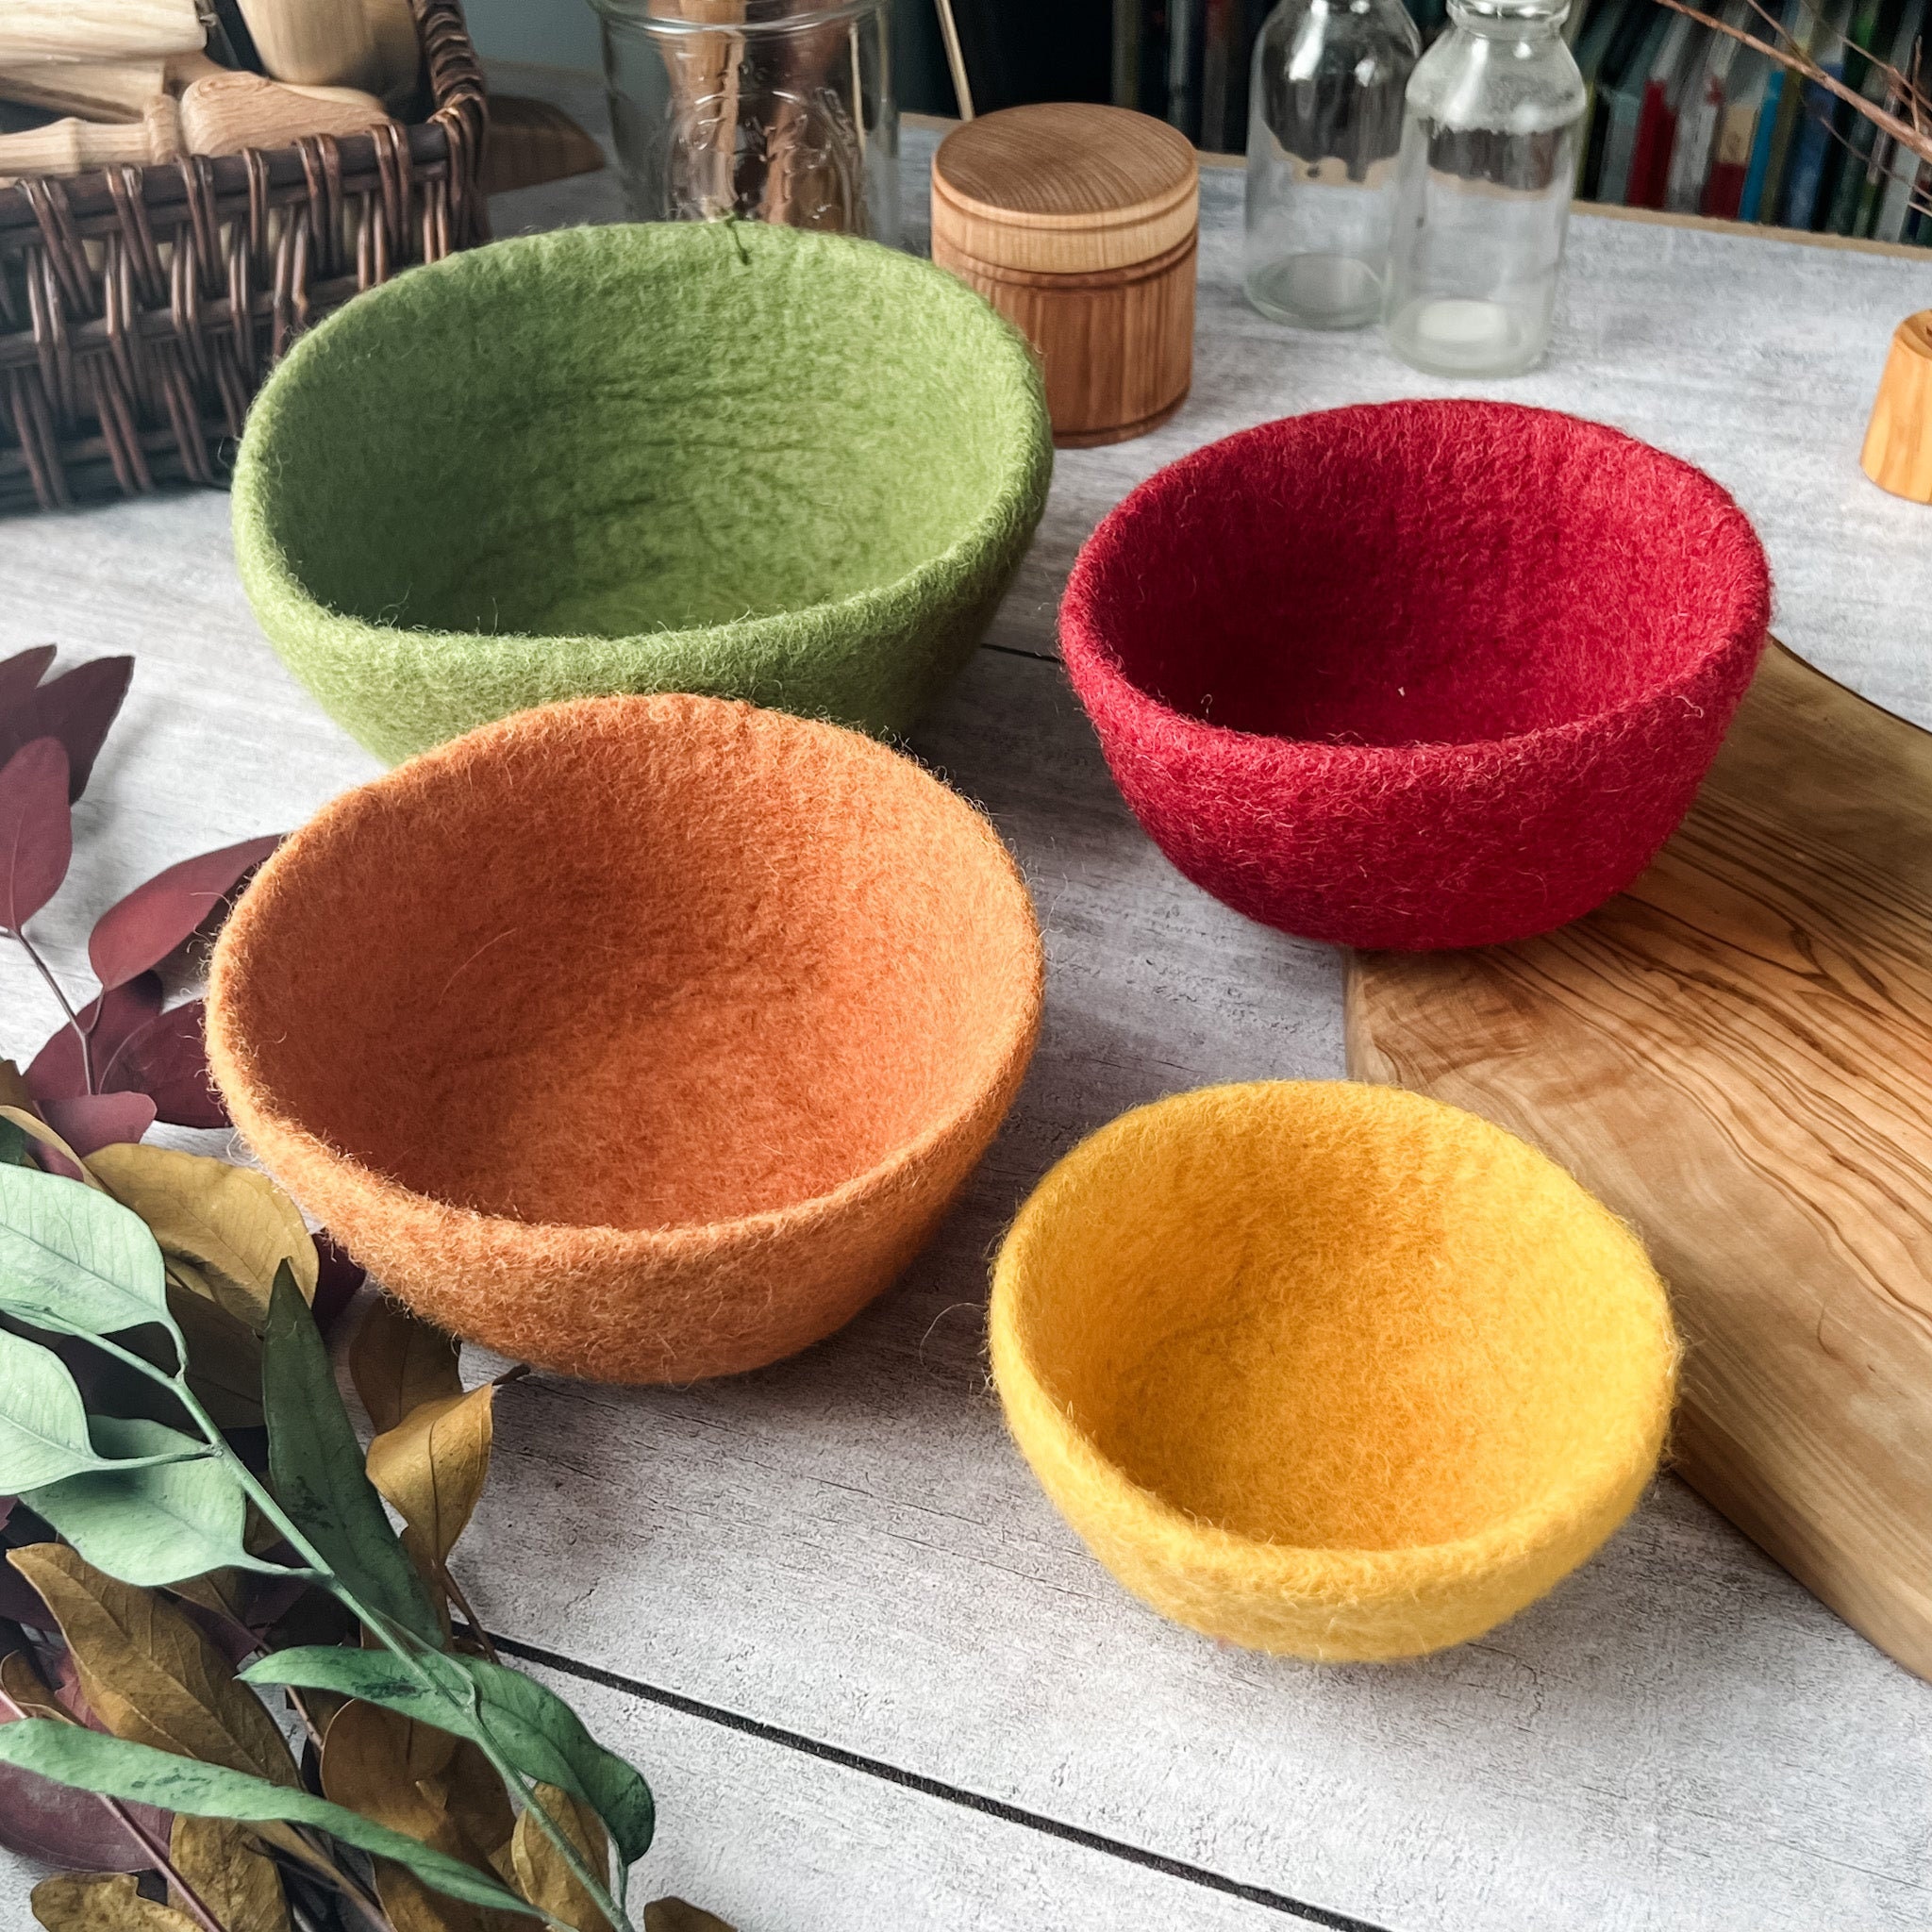 Hand turned stacking yarn bowls